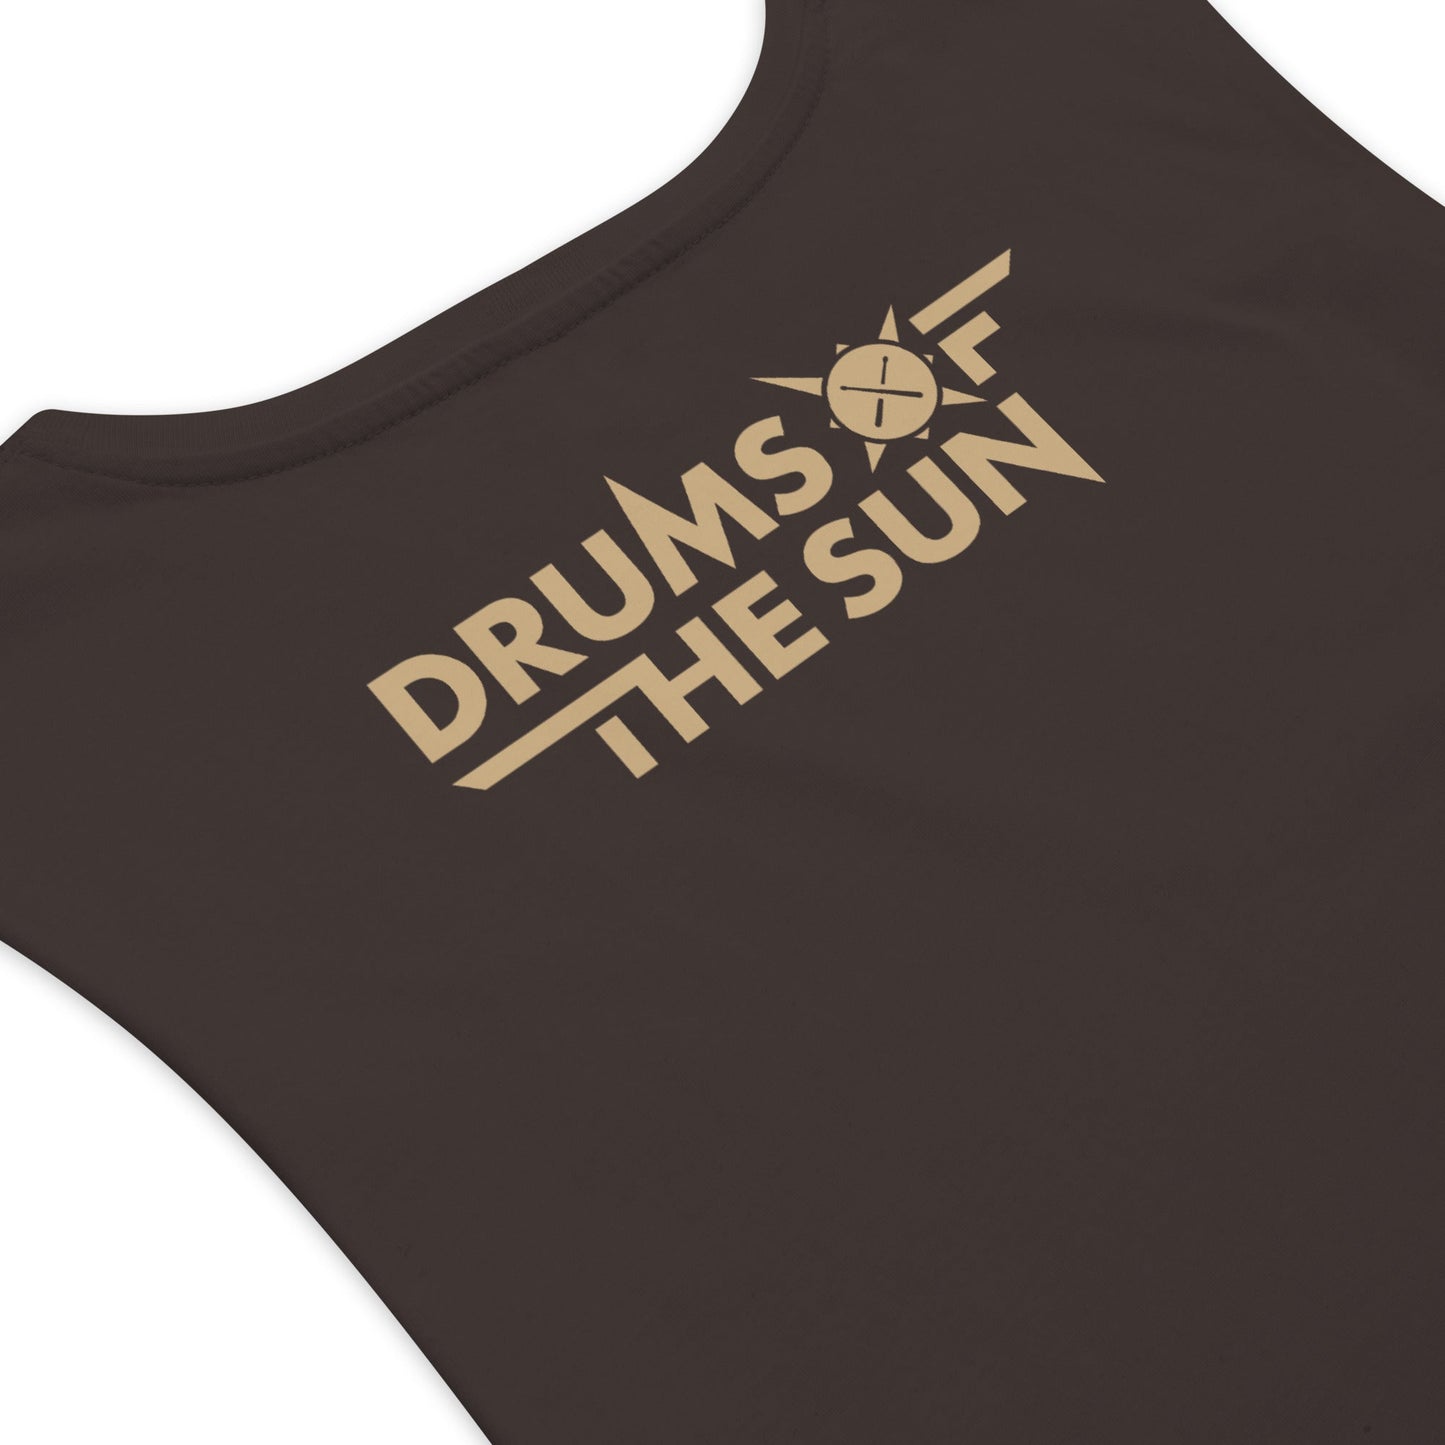 Drums of the Sun Men’s drop arm tank top - BeExtra! Apparel & More